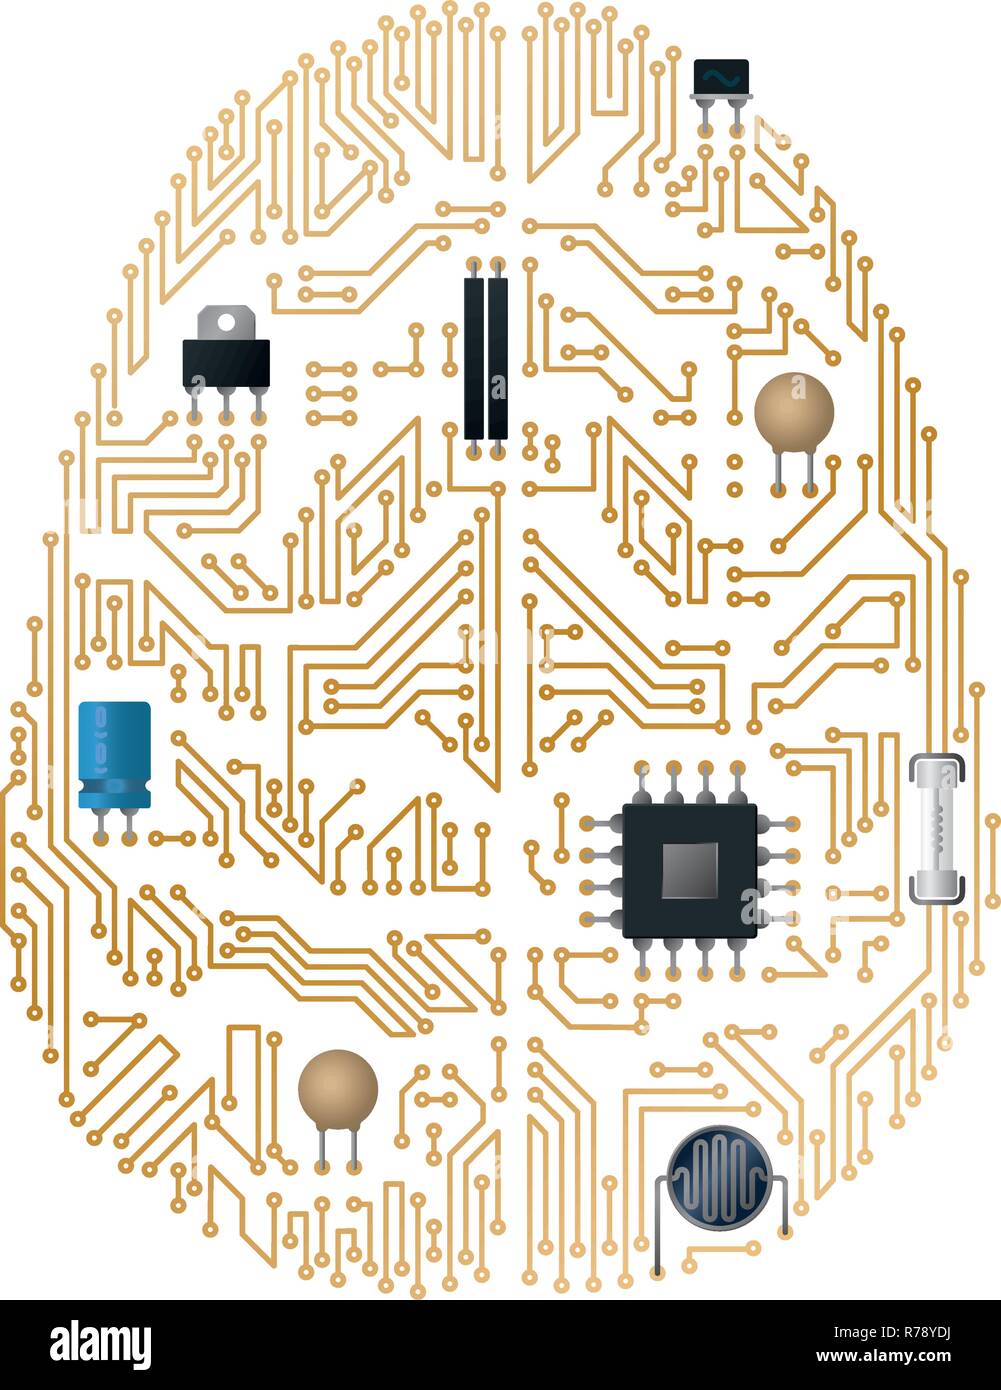 Human brain motherboard vector illustration. Artificial intelligence concept. Stock Vector